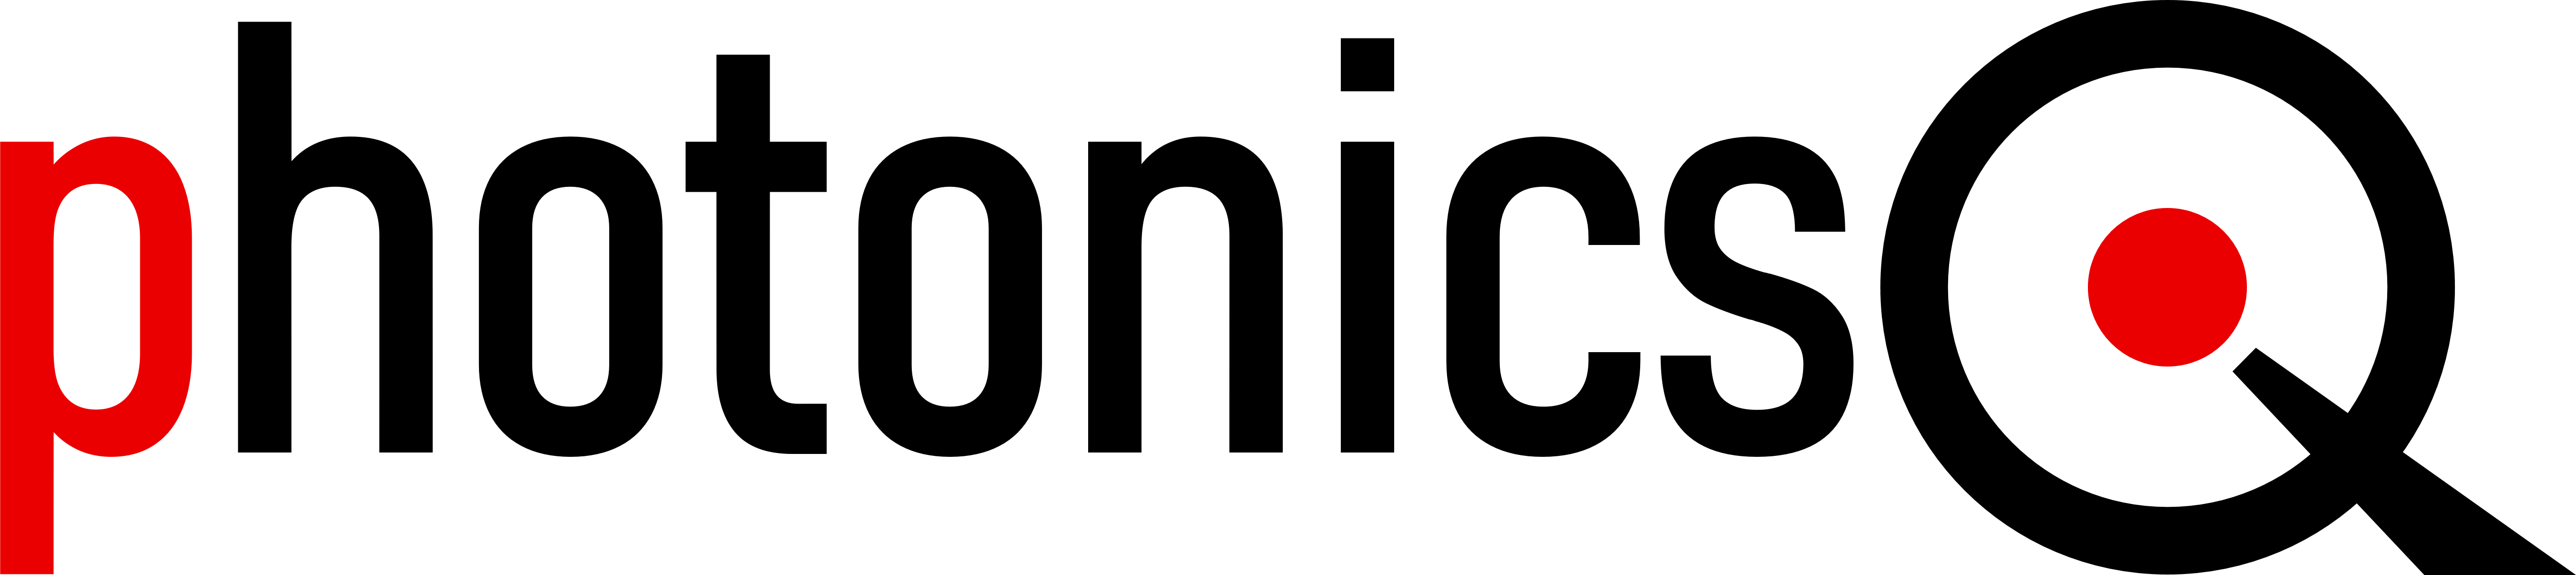 PhotonicsQ logo